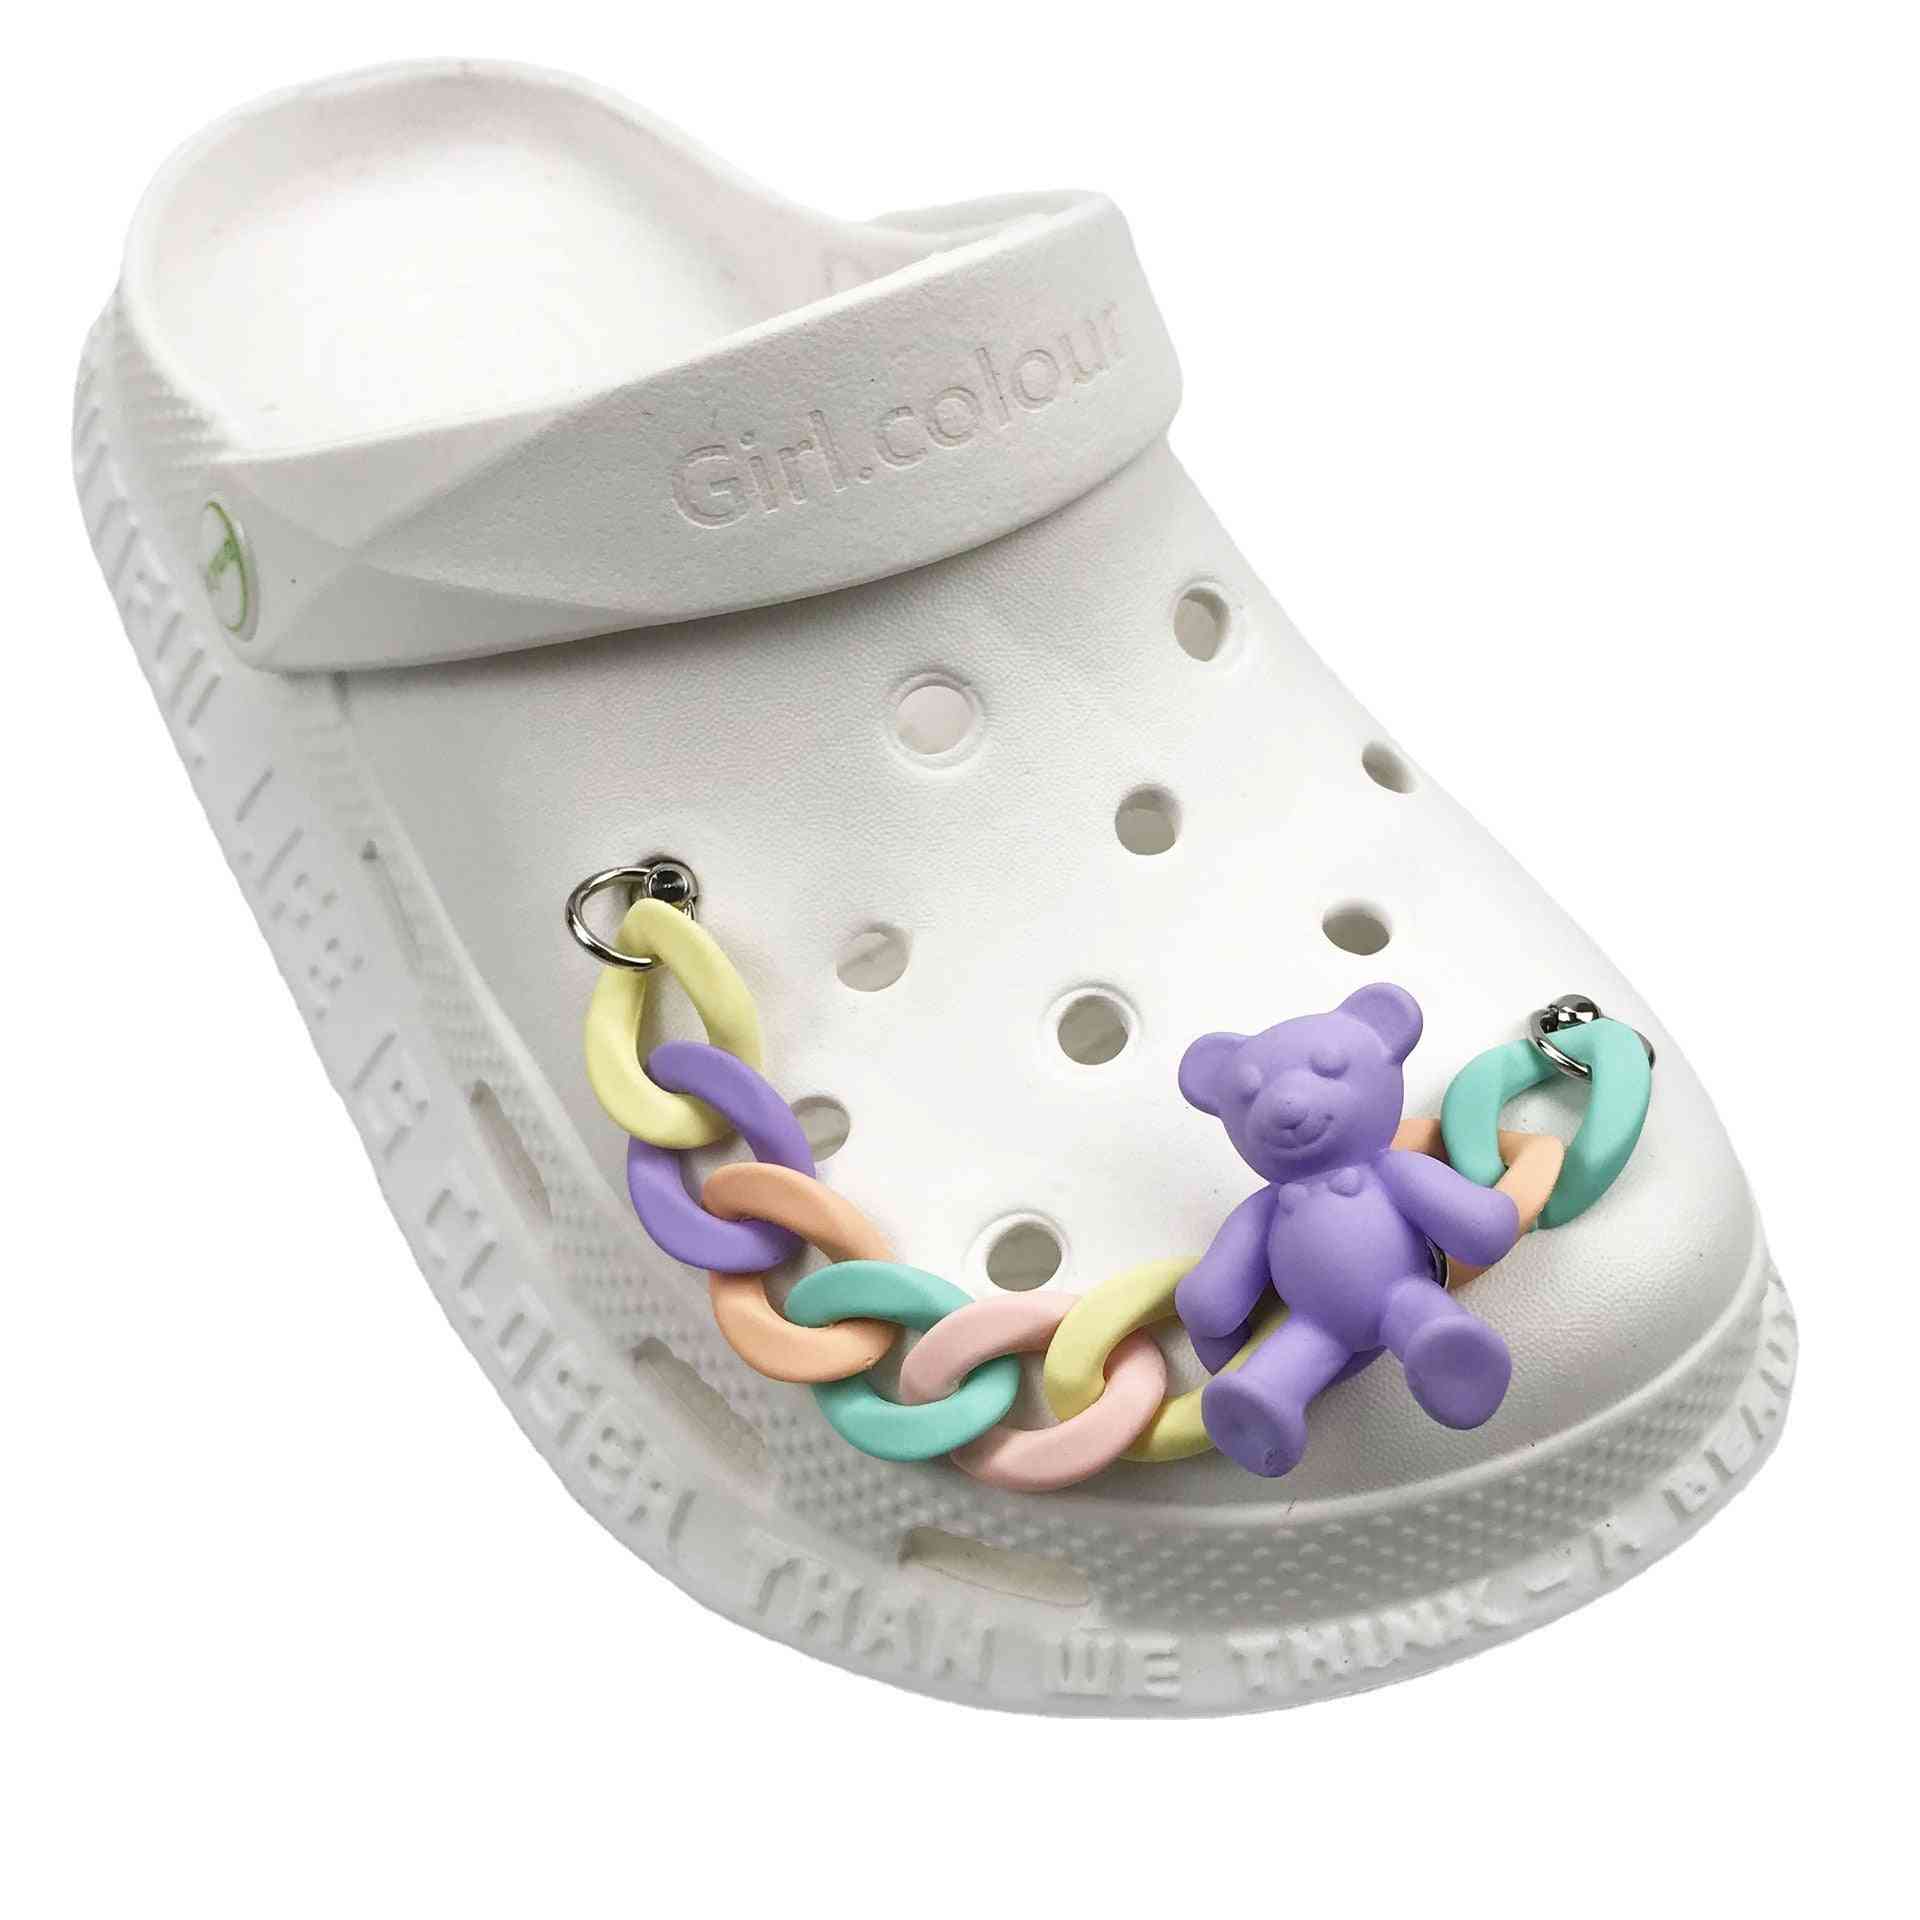 Cute Shoe For Crocs Charms Chain - Shoe Decorations Accessories